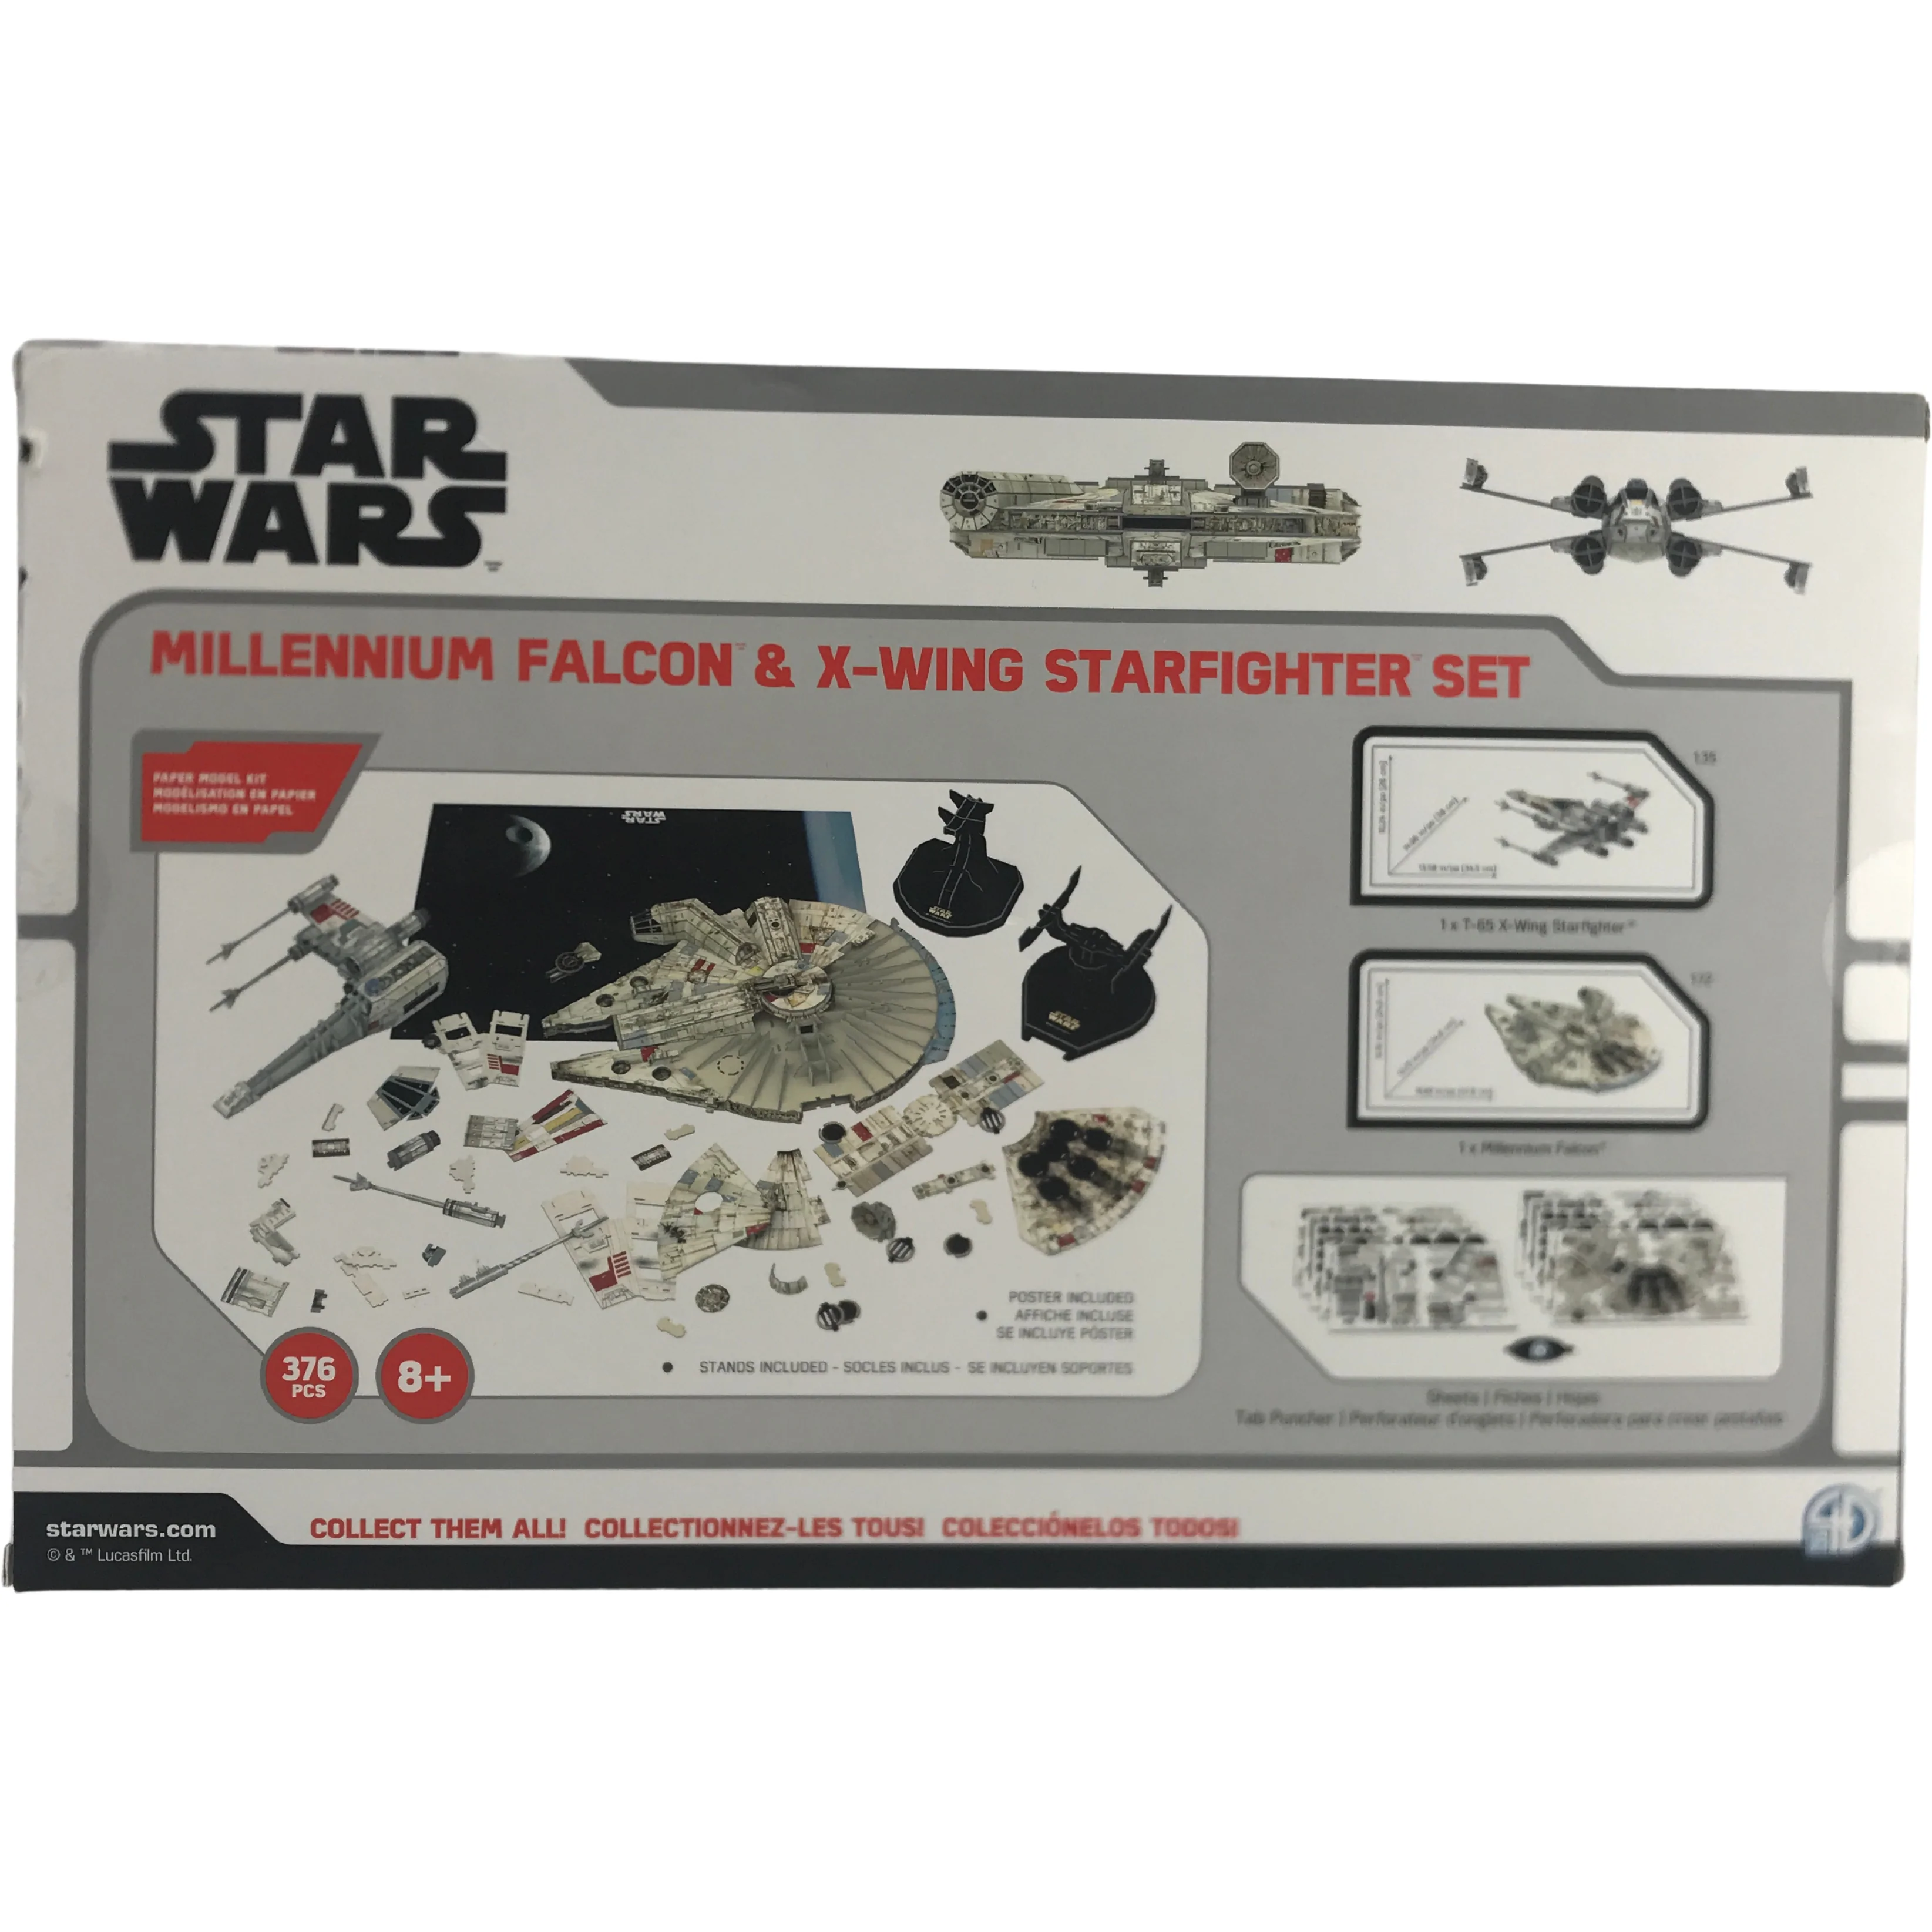 Star Wars Millennium Falcon & X-Wing StarFighter Building Set: 376 pieces